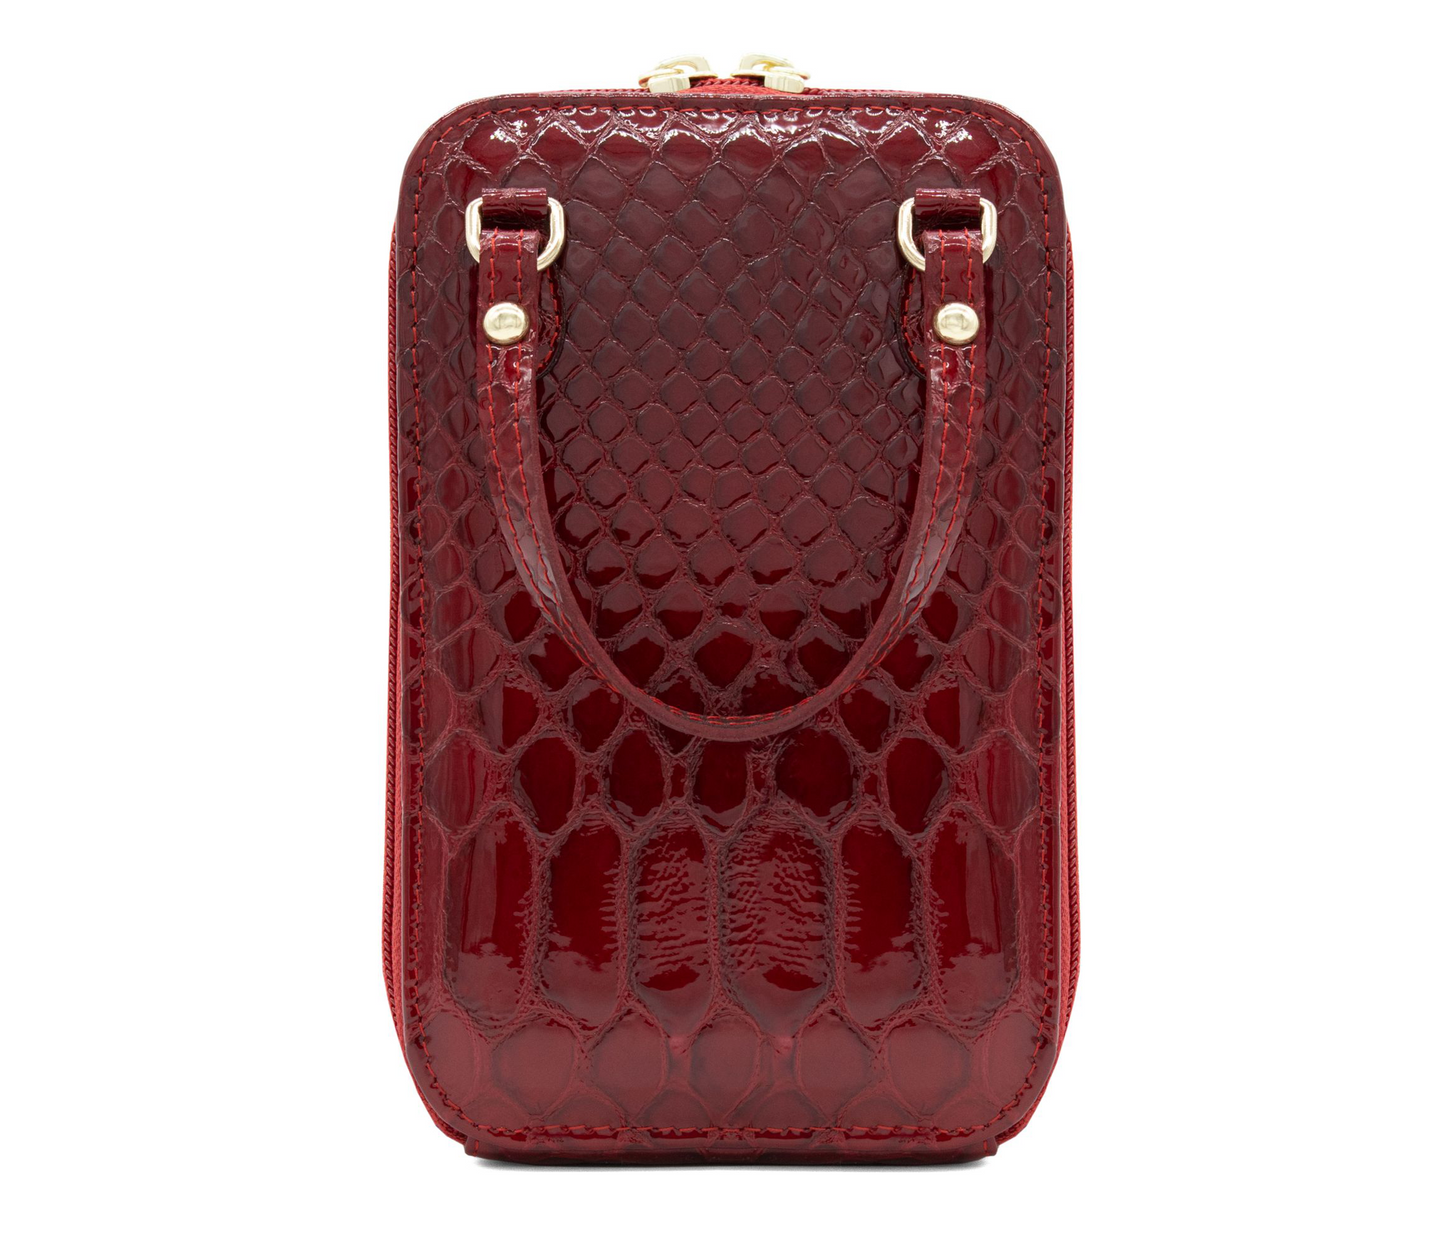 Cavalinho Gallop Patent Leather Phone Purse - Red - Artboard3